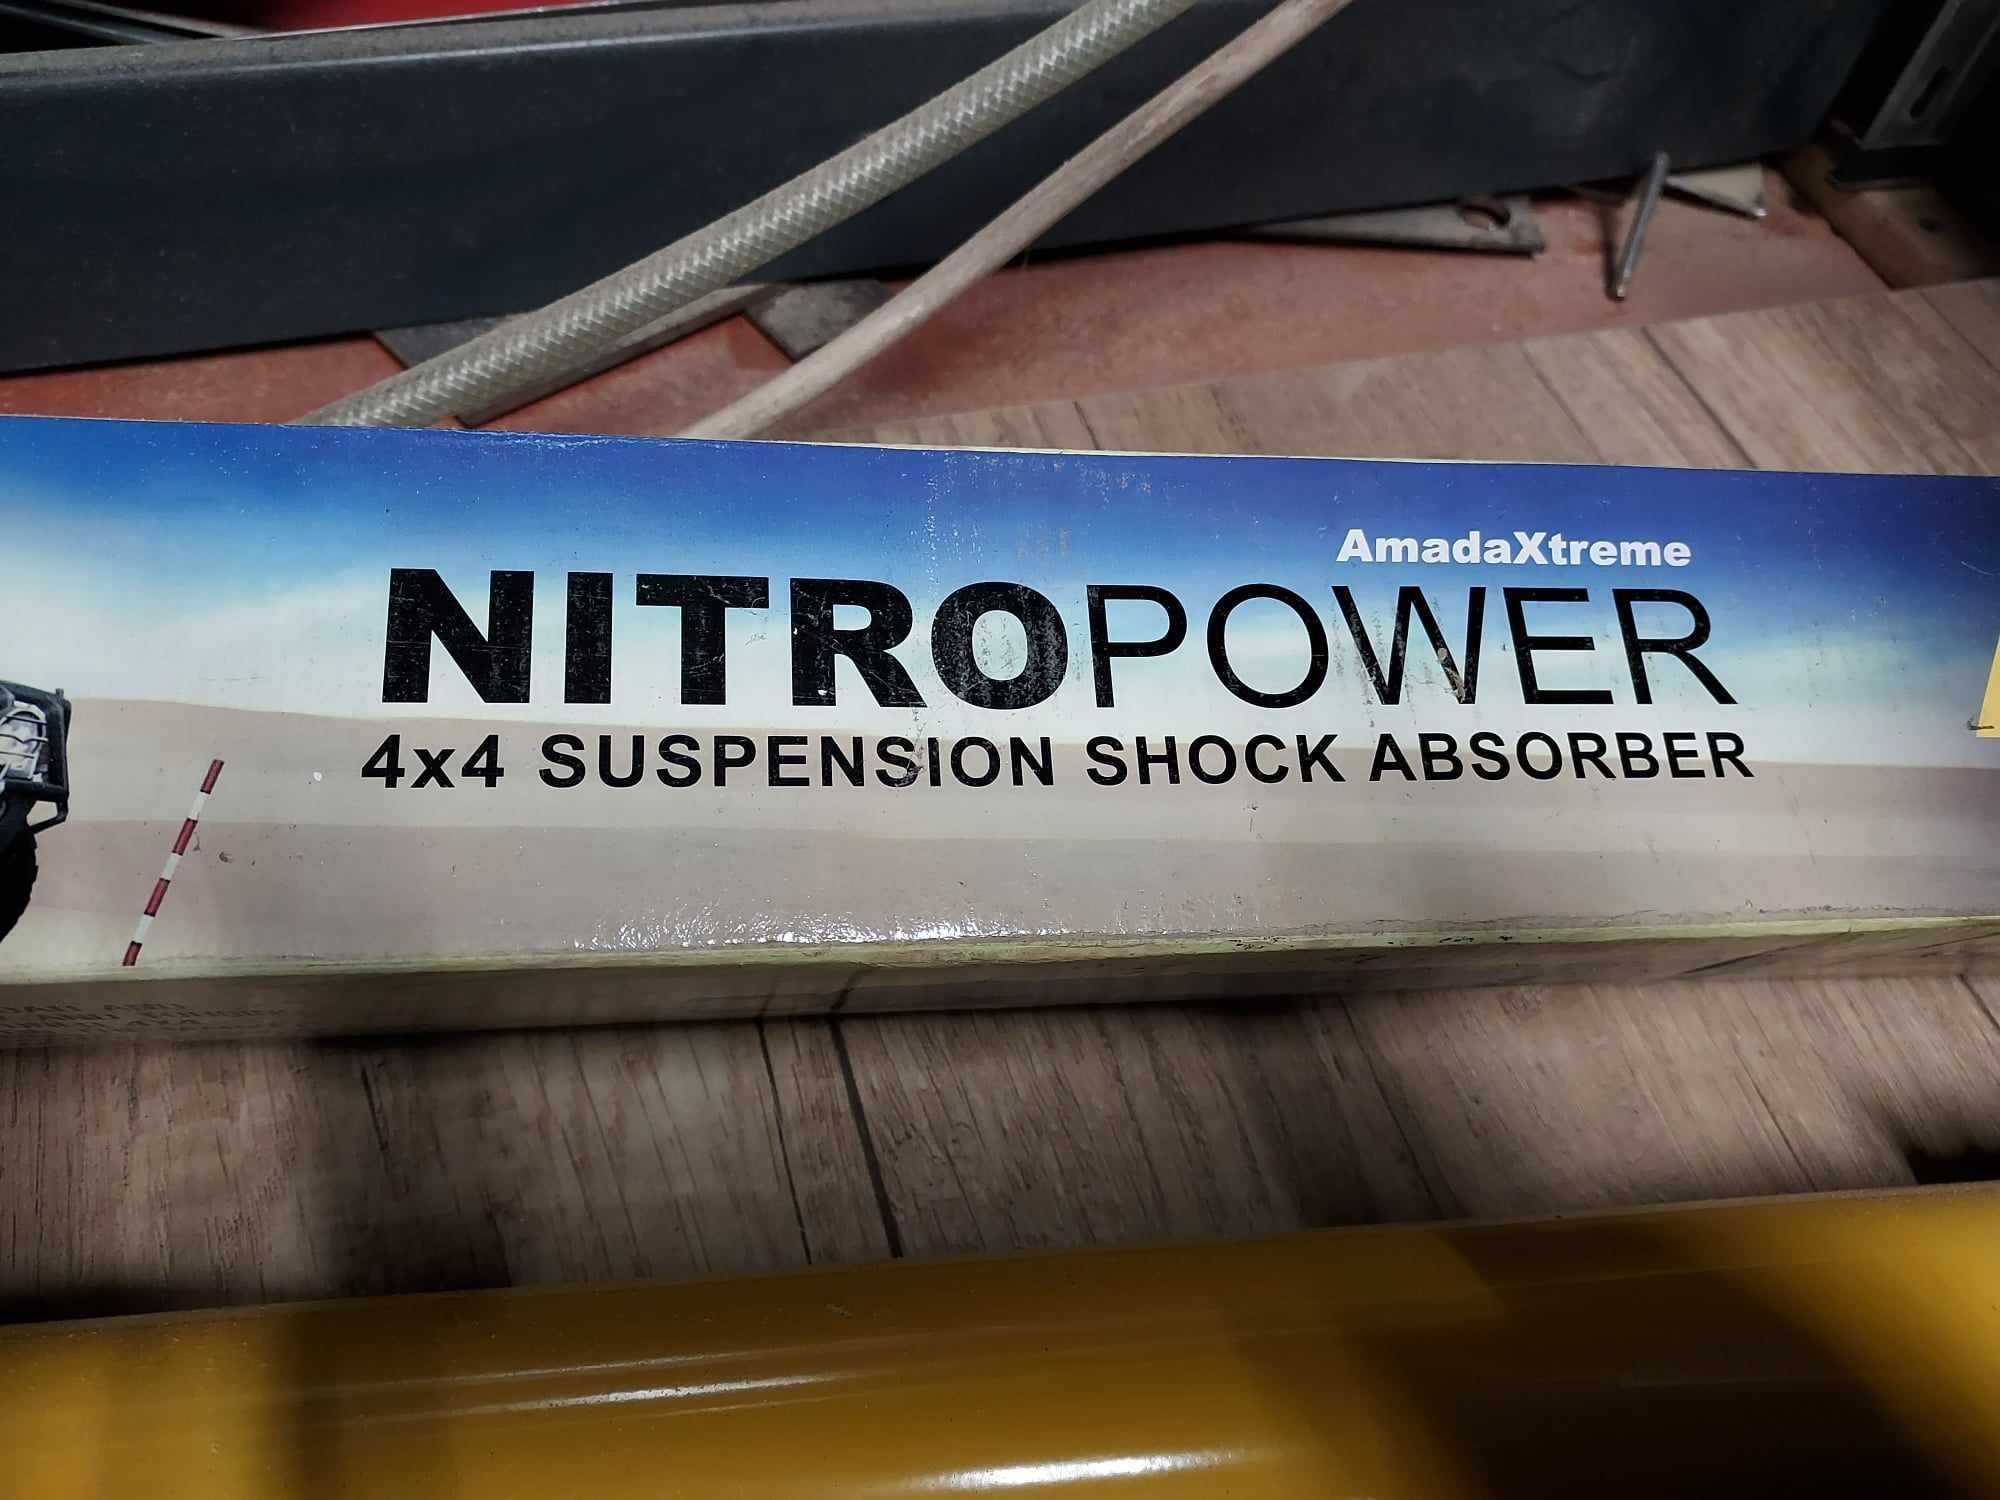 Nitro power 4x4 suspension shock absorber